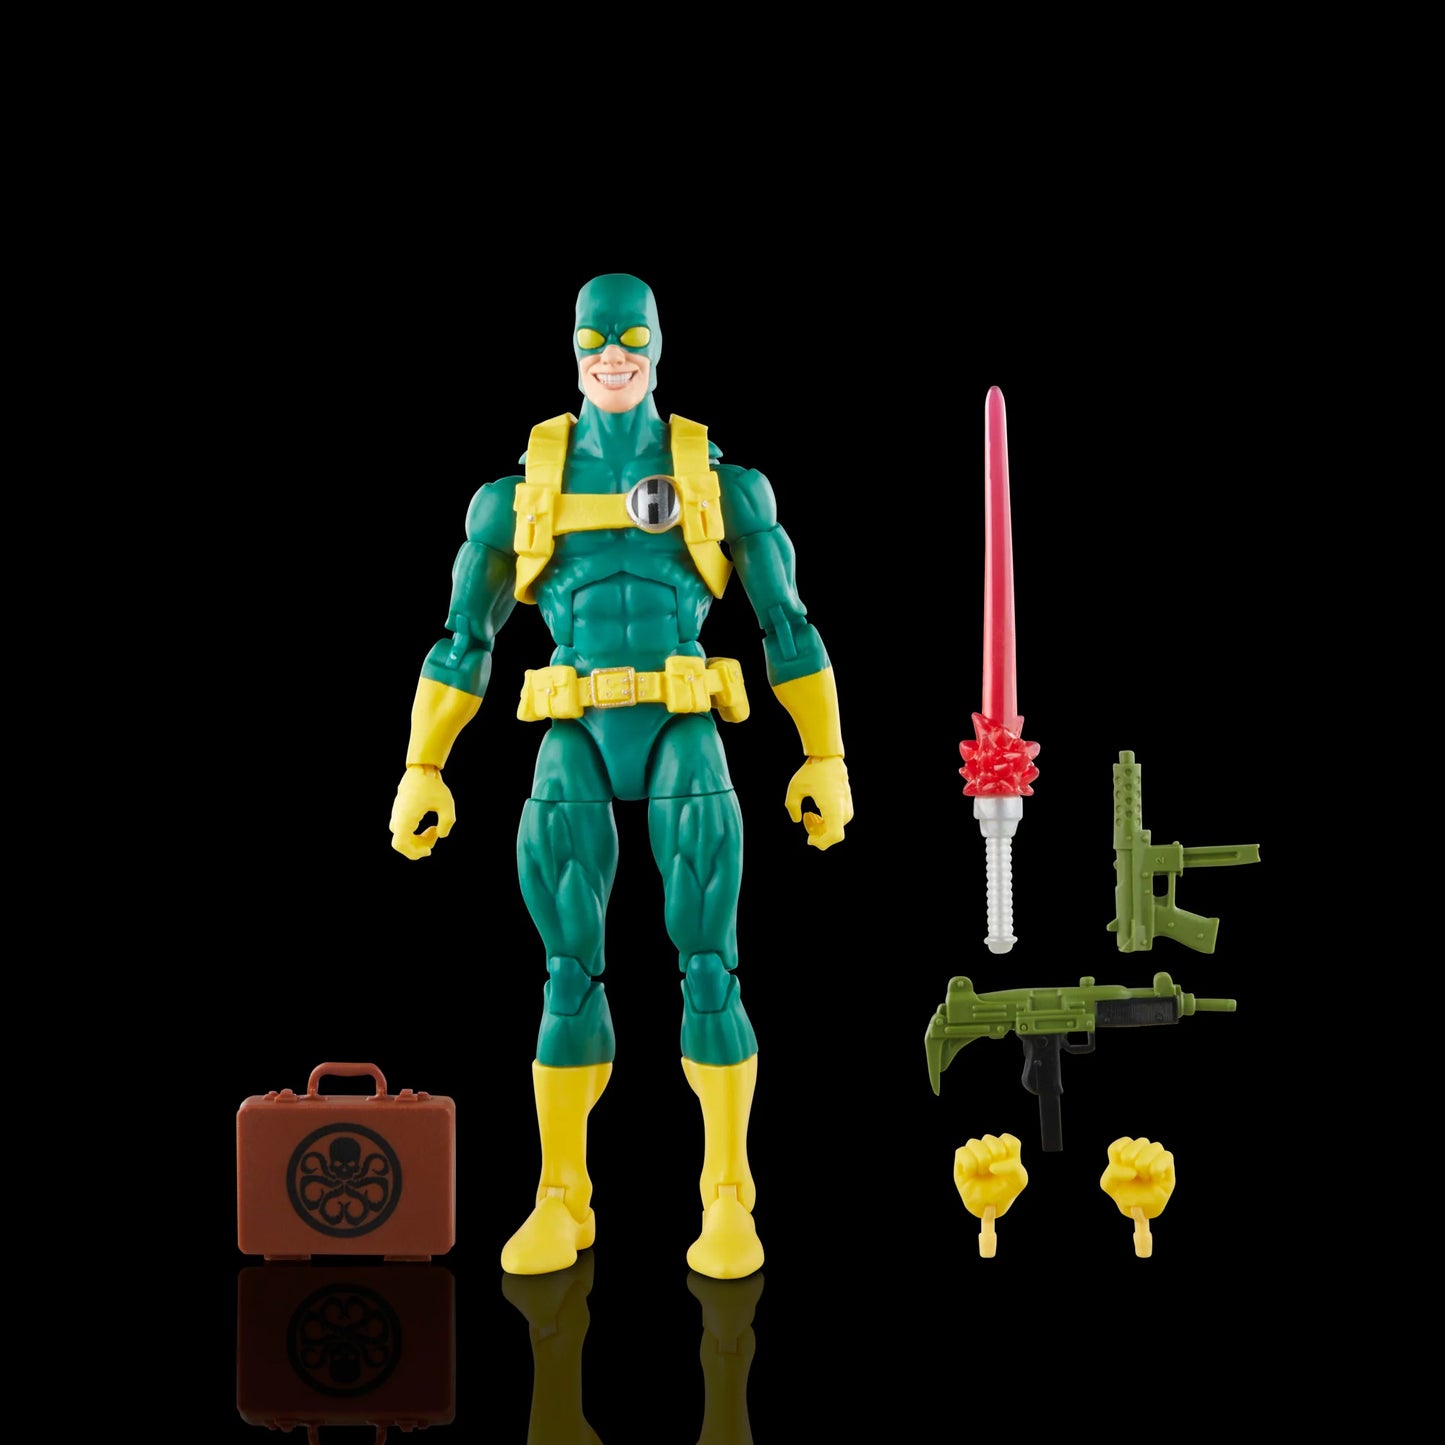 Marvel Legends Series Deadpool and Bob, Agent of Hydra EXCLUSIVA - 1 POR PERSONA